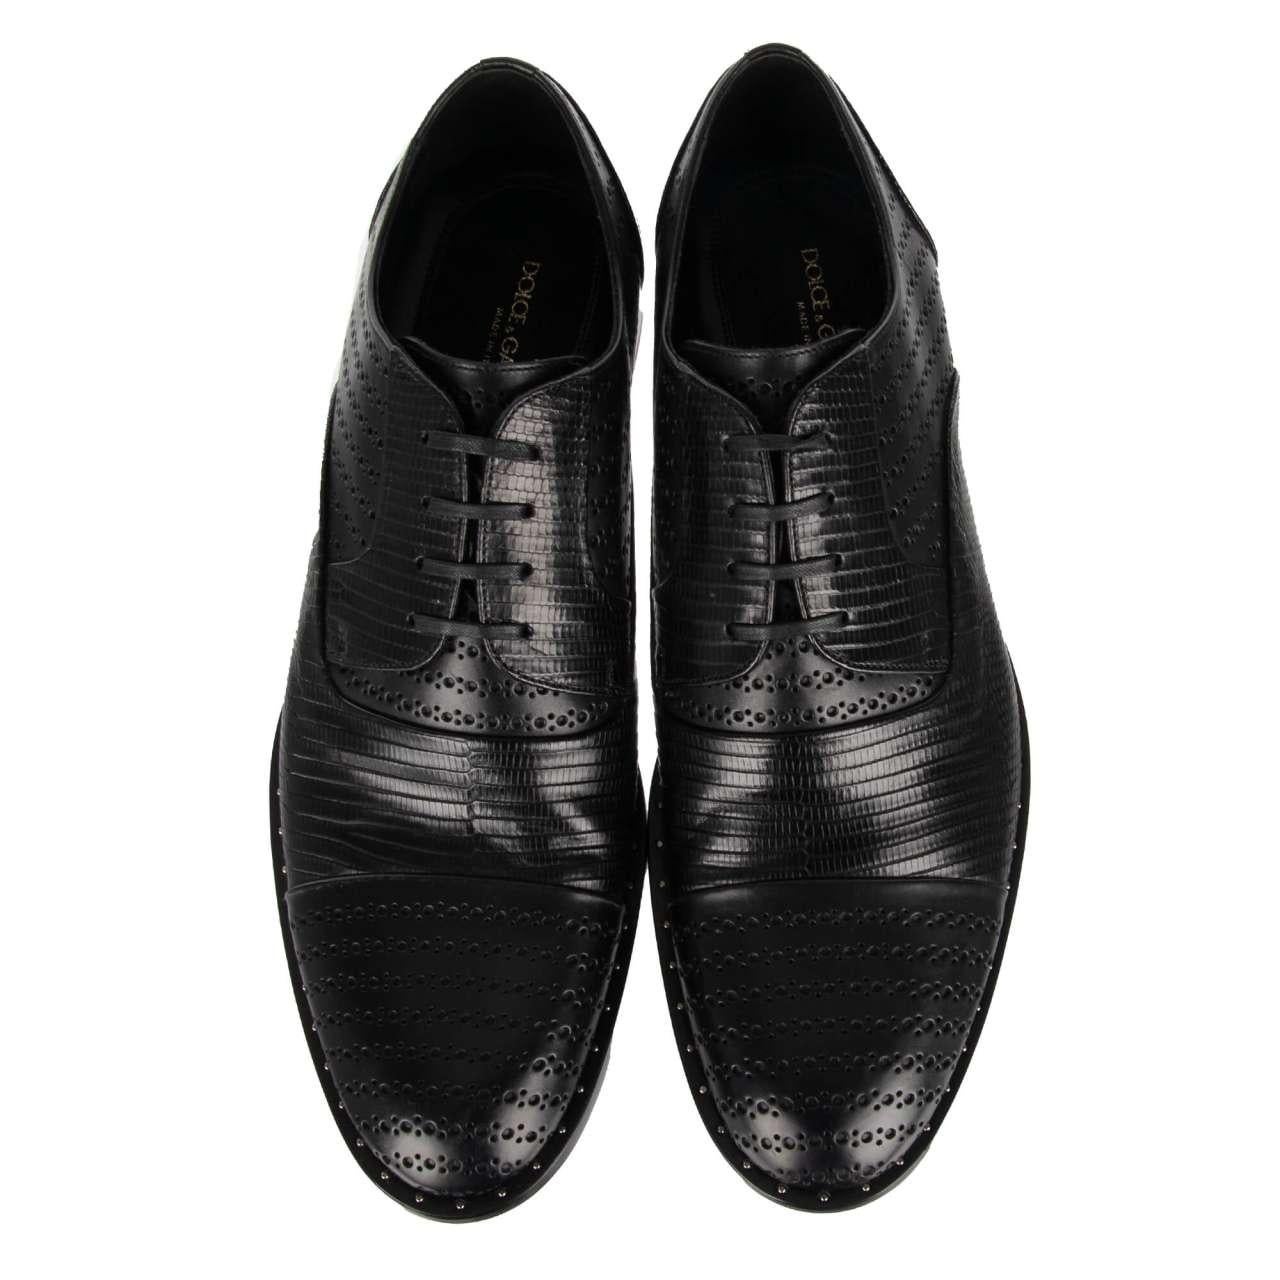 D&G Formal Patchwork Lizard Leather Derby Shoes NAPOLI Black 44 UK 10 US 11 In Excellent Condition For Sale In Erkrath, DE